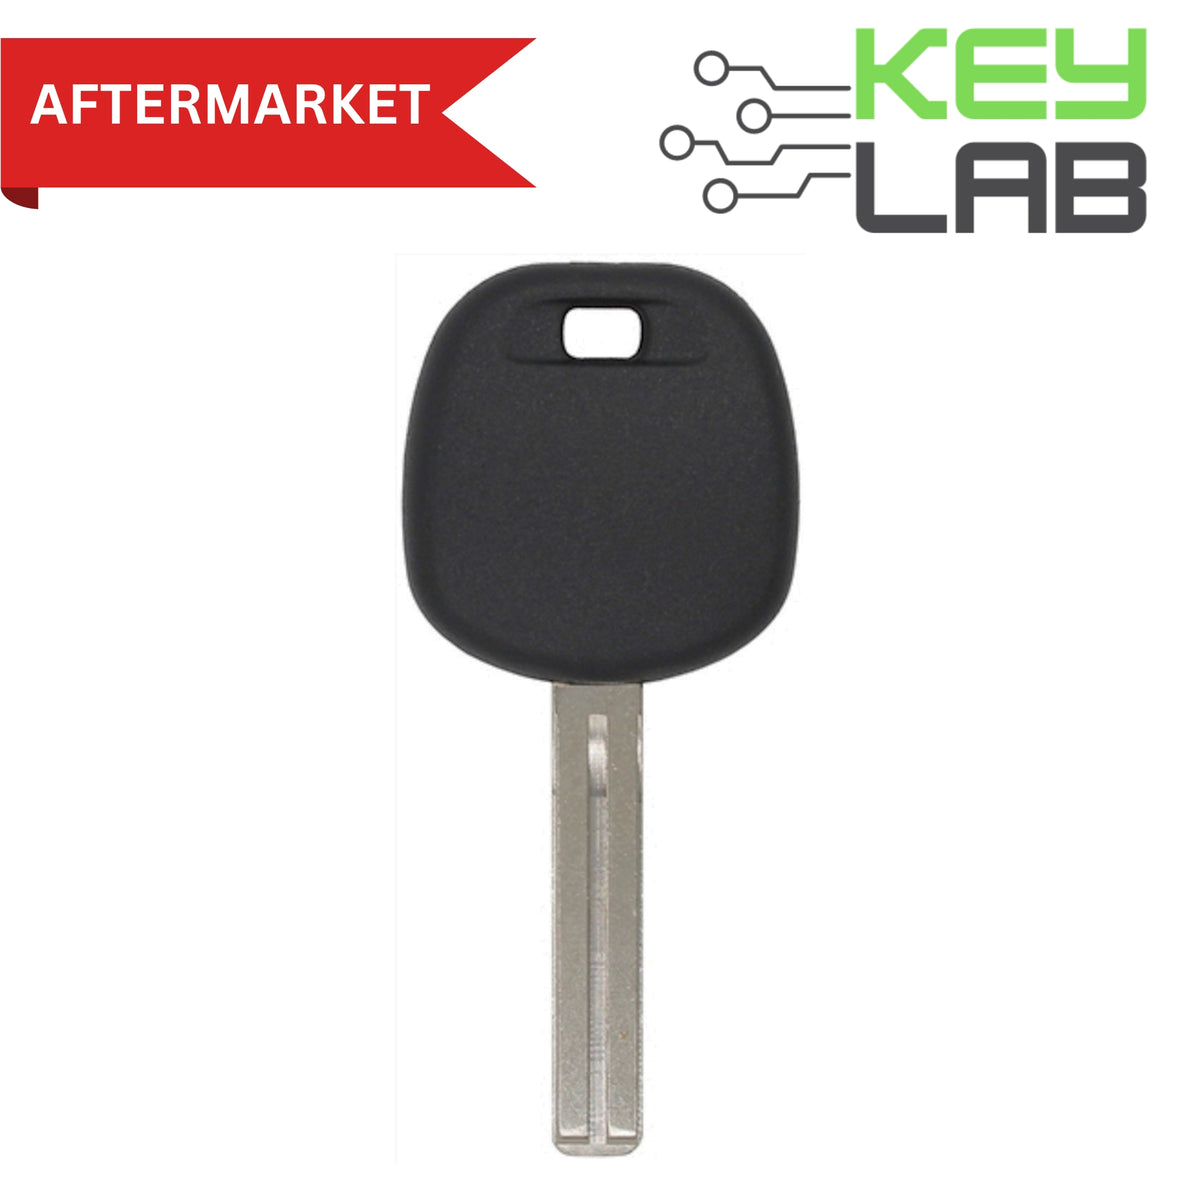 Hyundai Aftermarket 2006-2018 Azera, Elantra Transponder Key HY20-PT (46 Chip) - Royal Key Supply